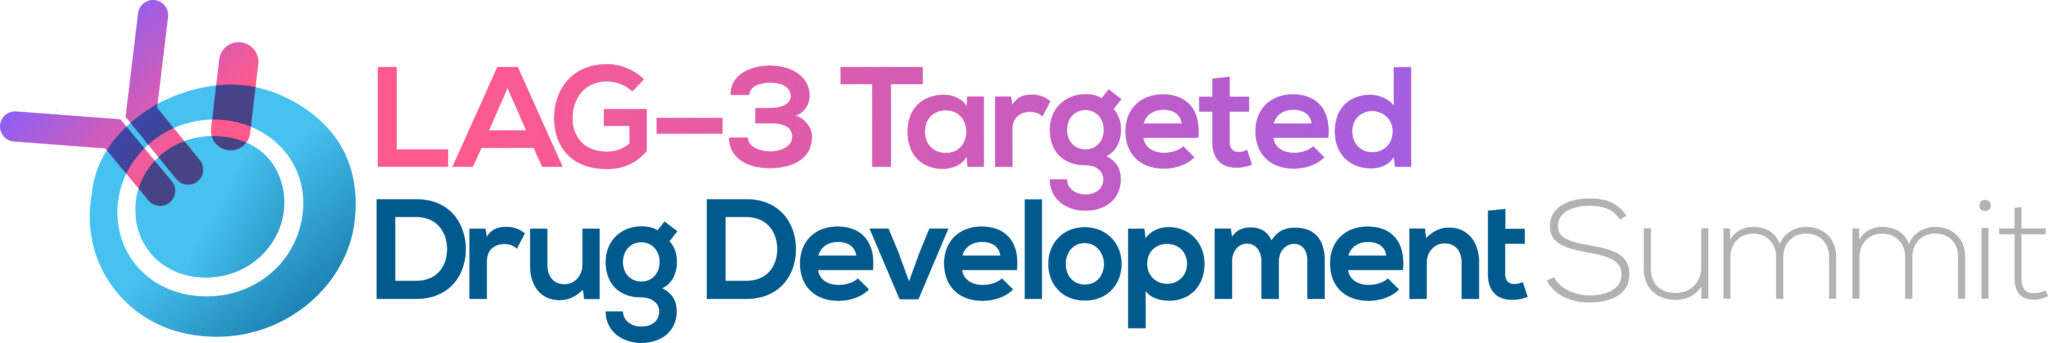 HW210909-LAG-3-Targeted-Drug-Development-Summit-Logo-FINAL-2048x343